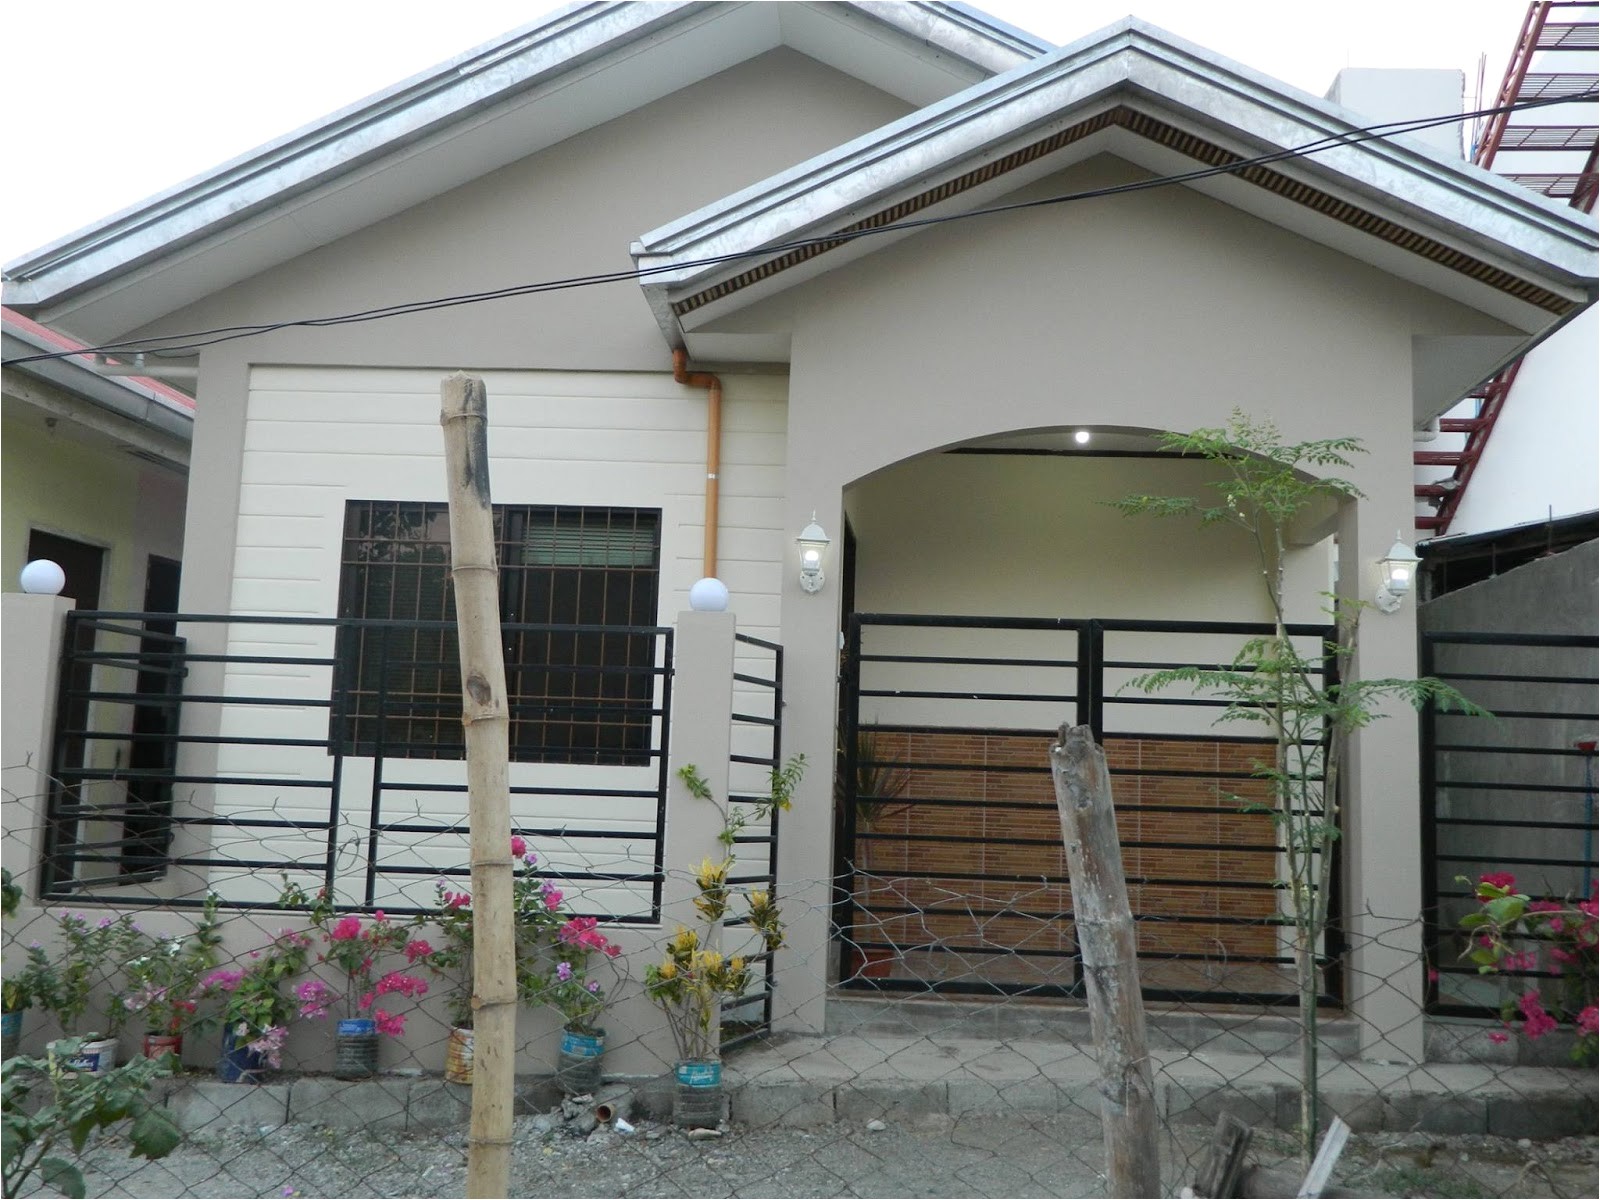 House Plans Under 200k Pesos thoughtskoto